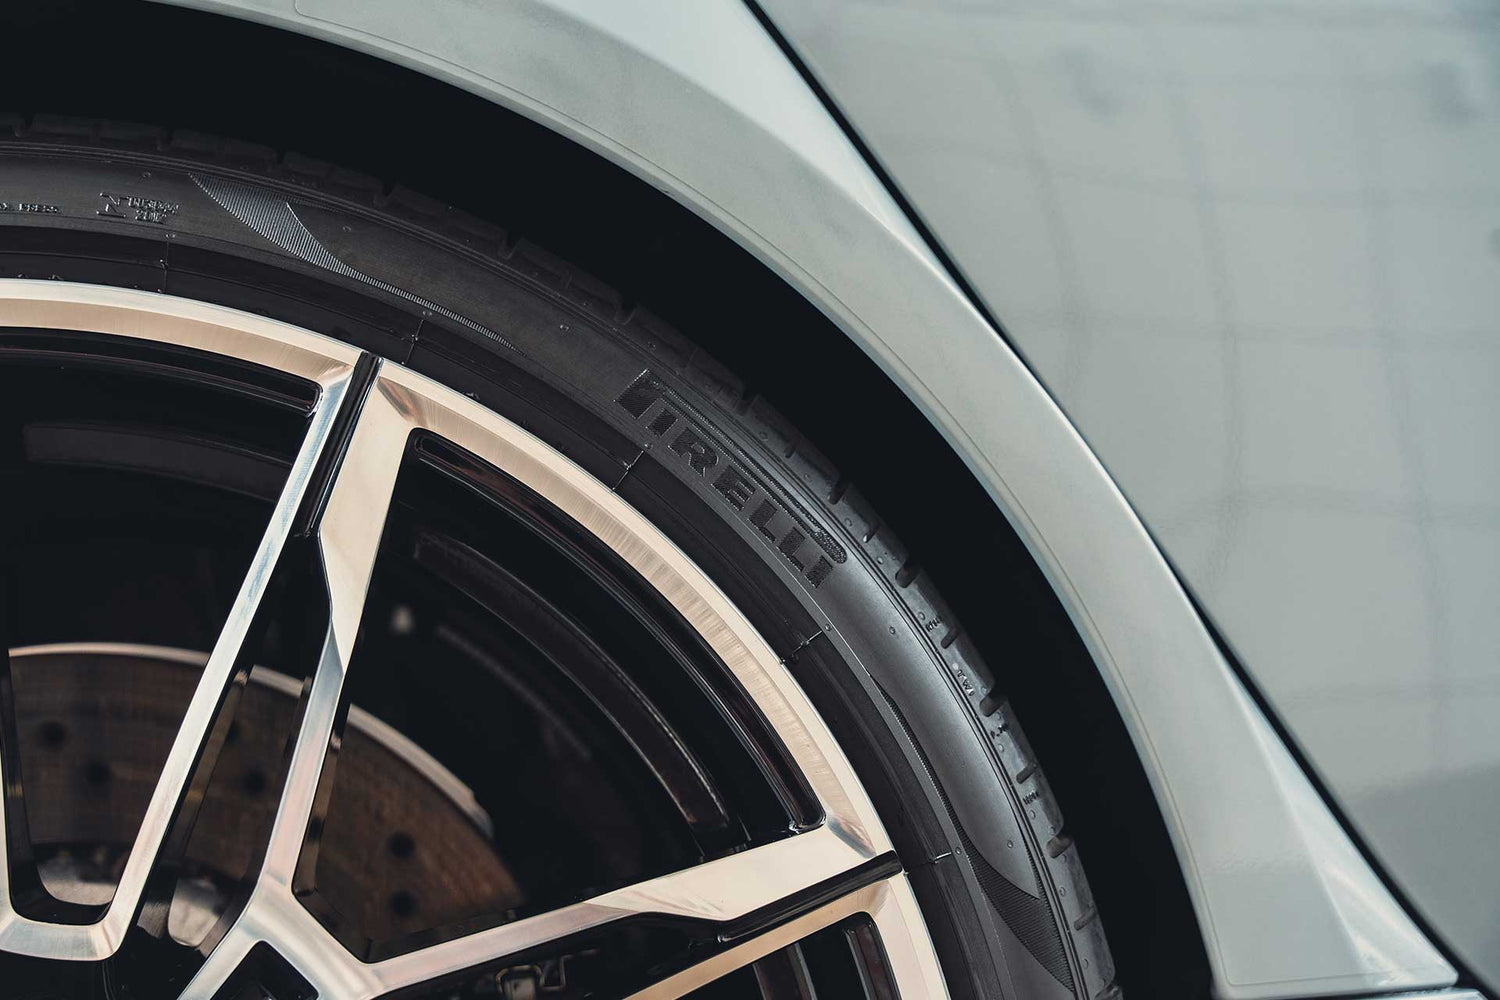 matte tire shine on sidewall of pirelli tire